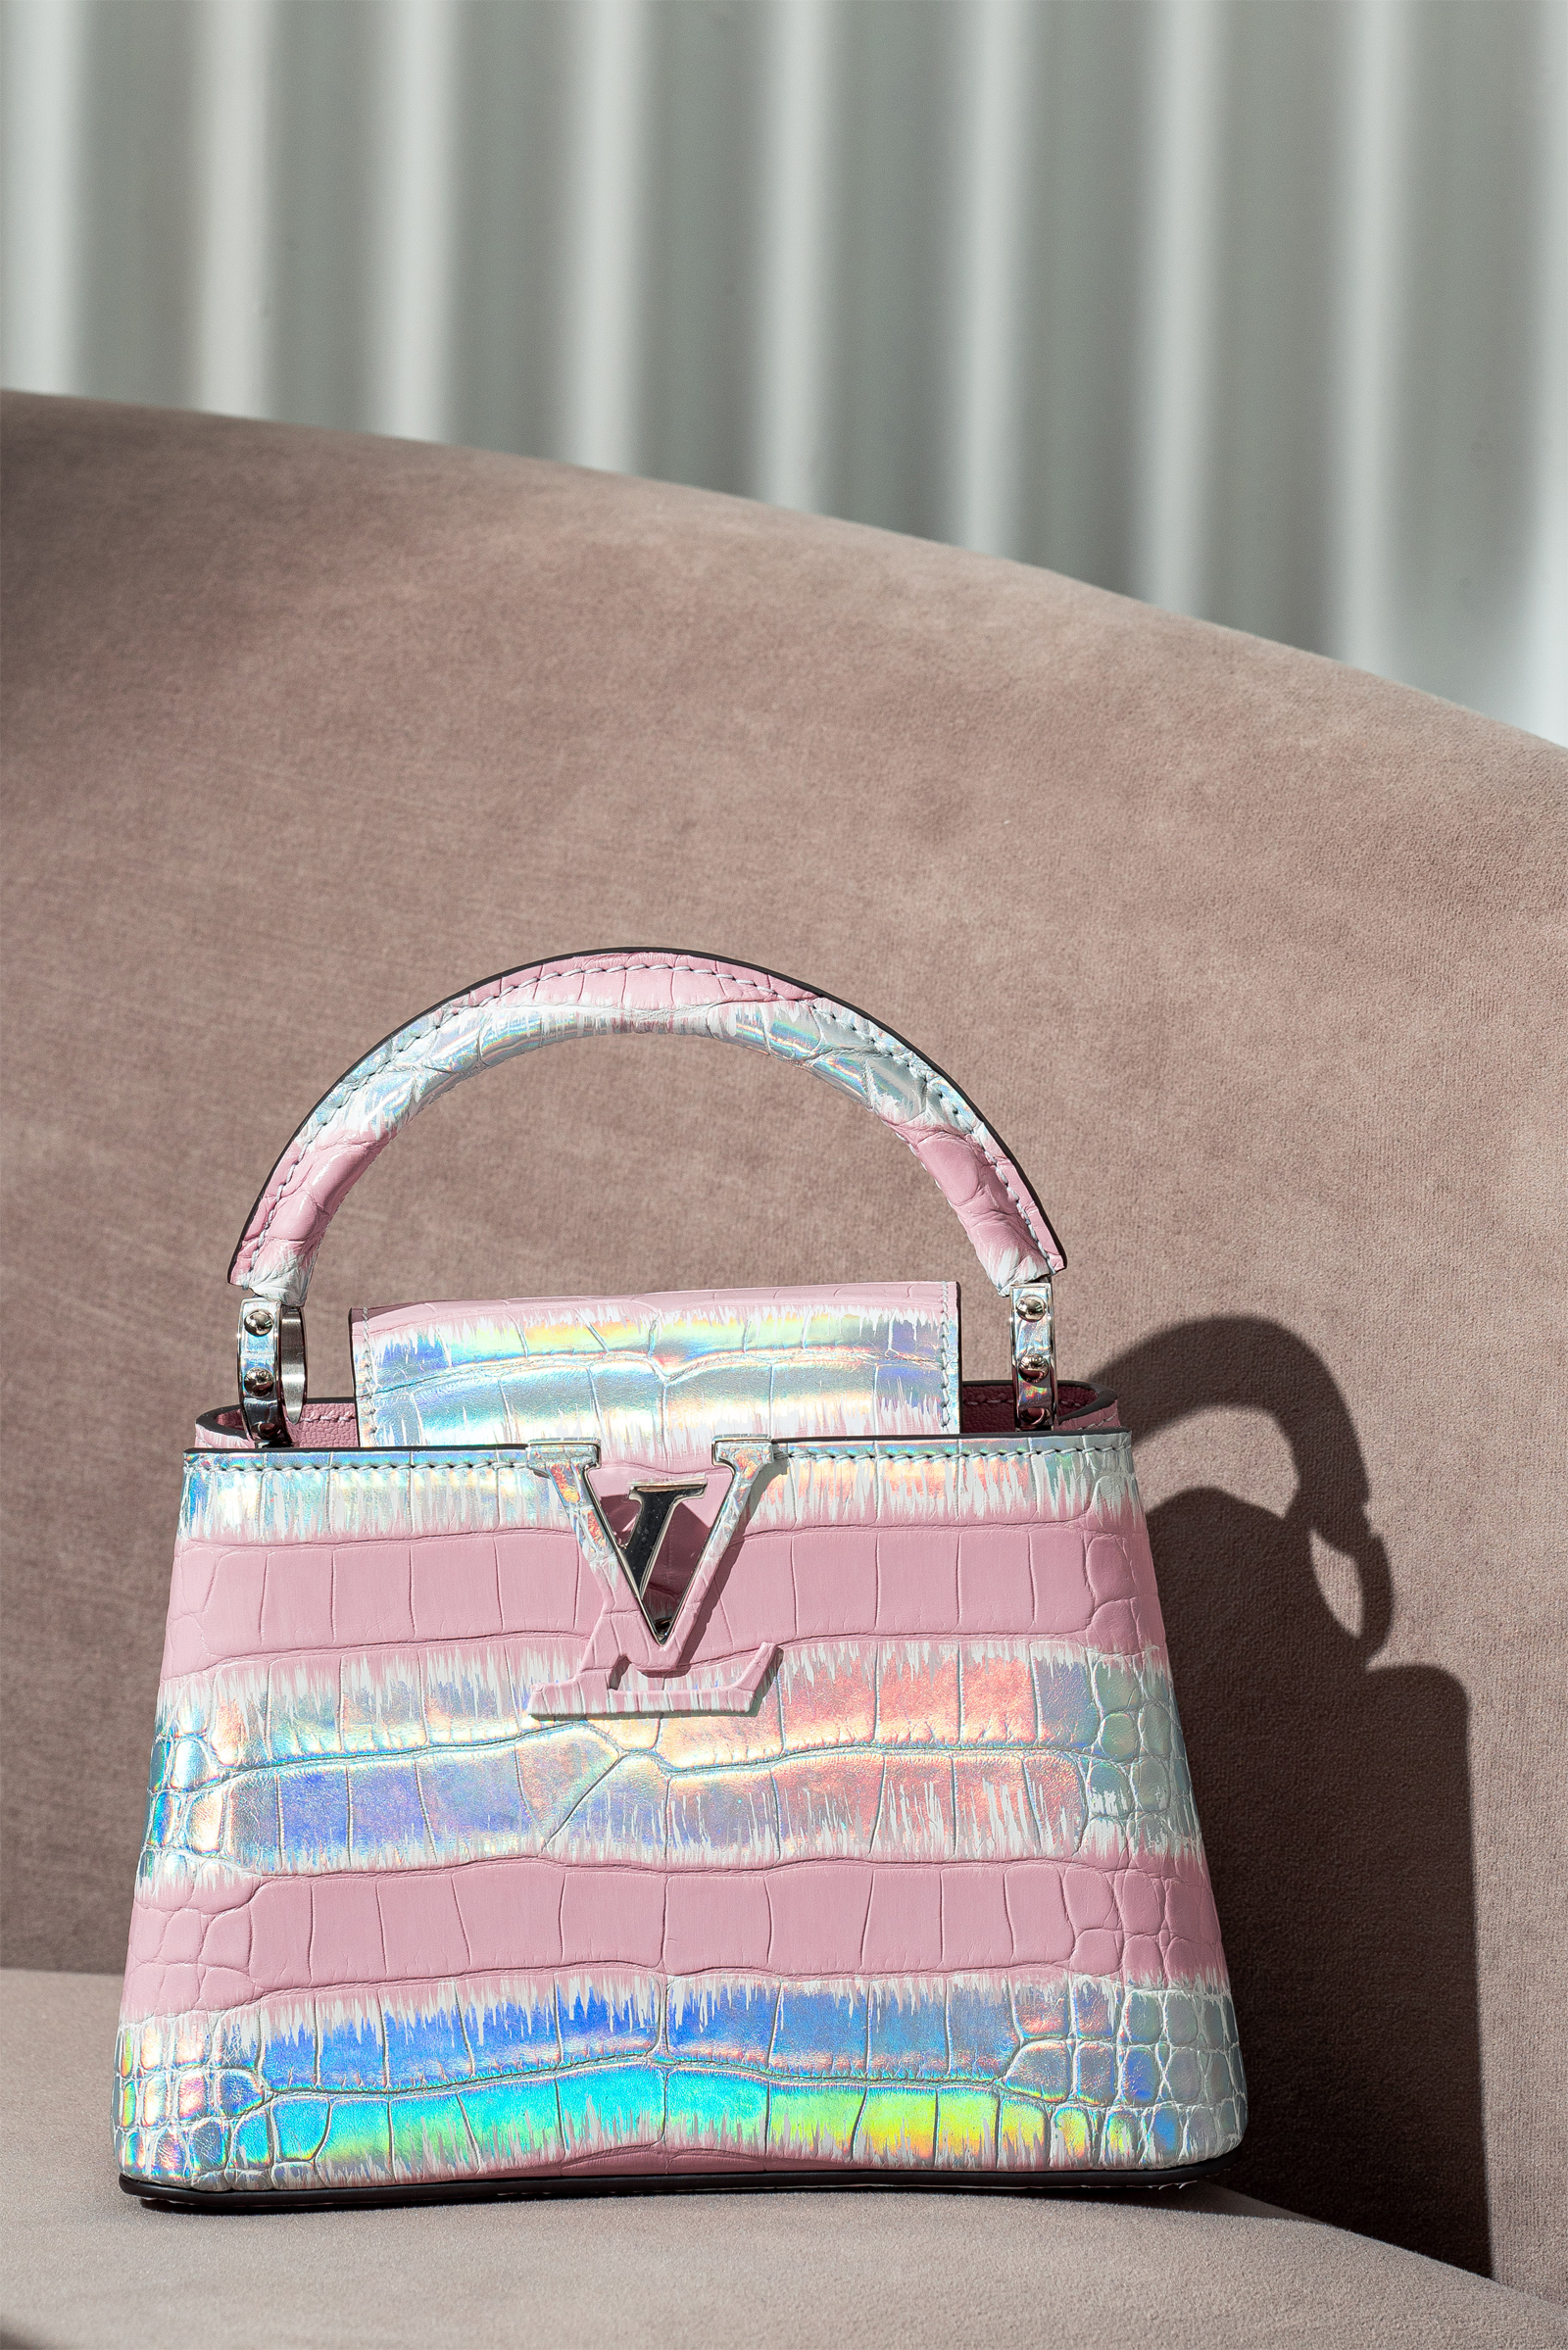 KKLEATHERGOODS on X: Ombré rainbow #LouisVuitton #custompainted #custom #lv  #rainbow #luxury  / X